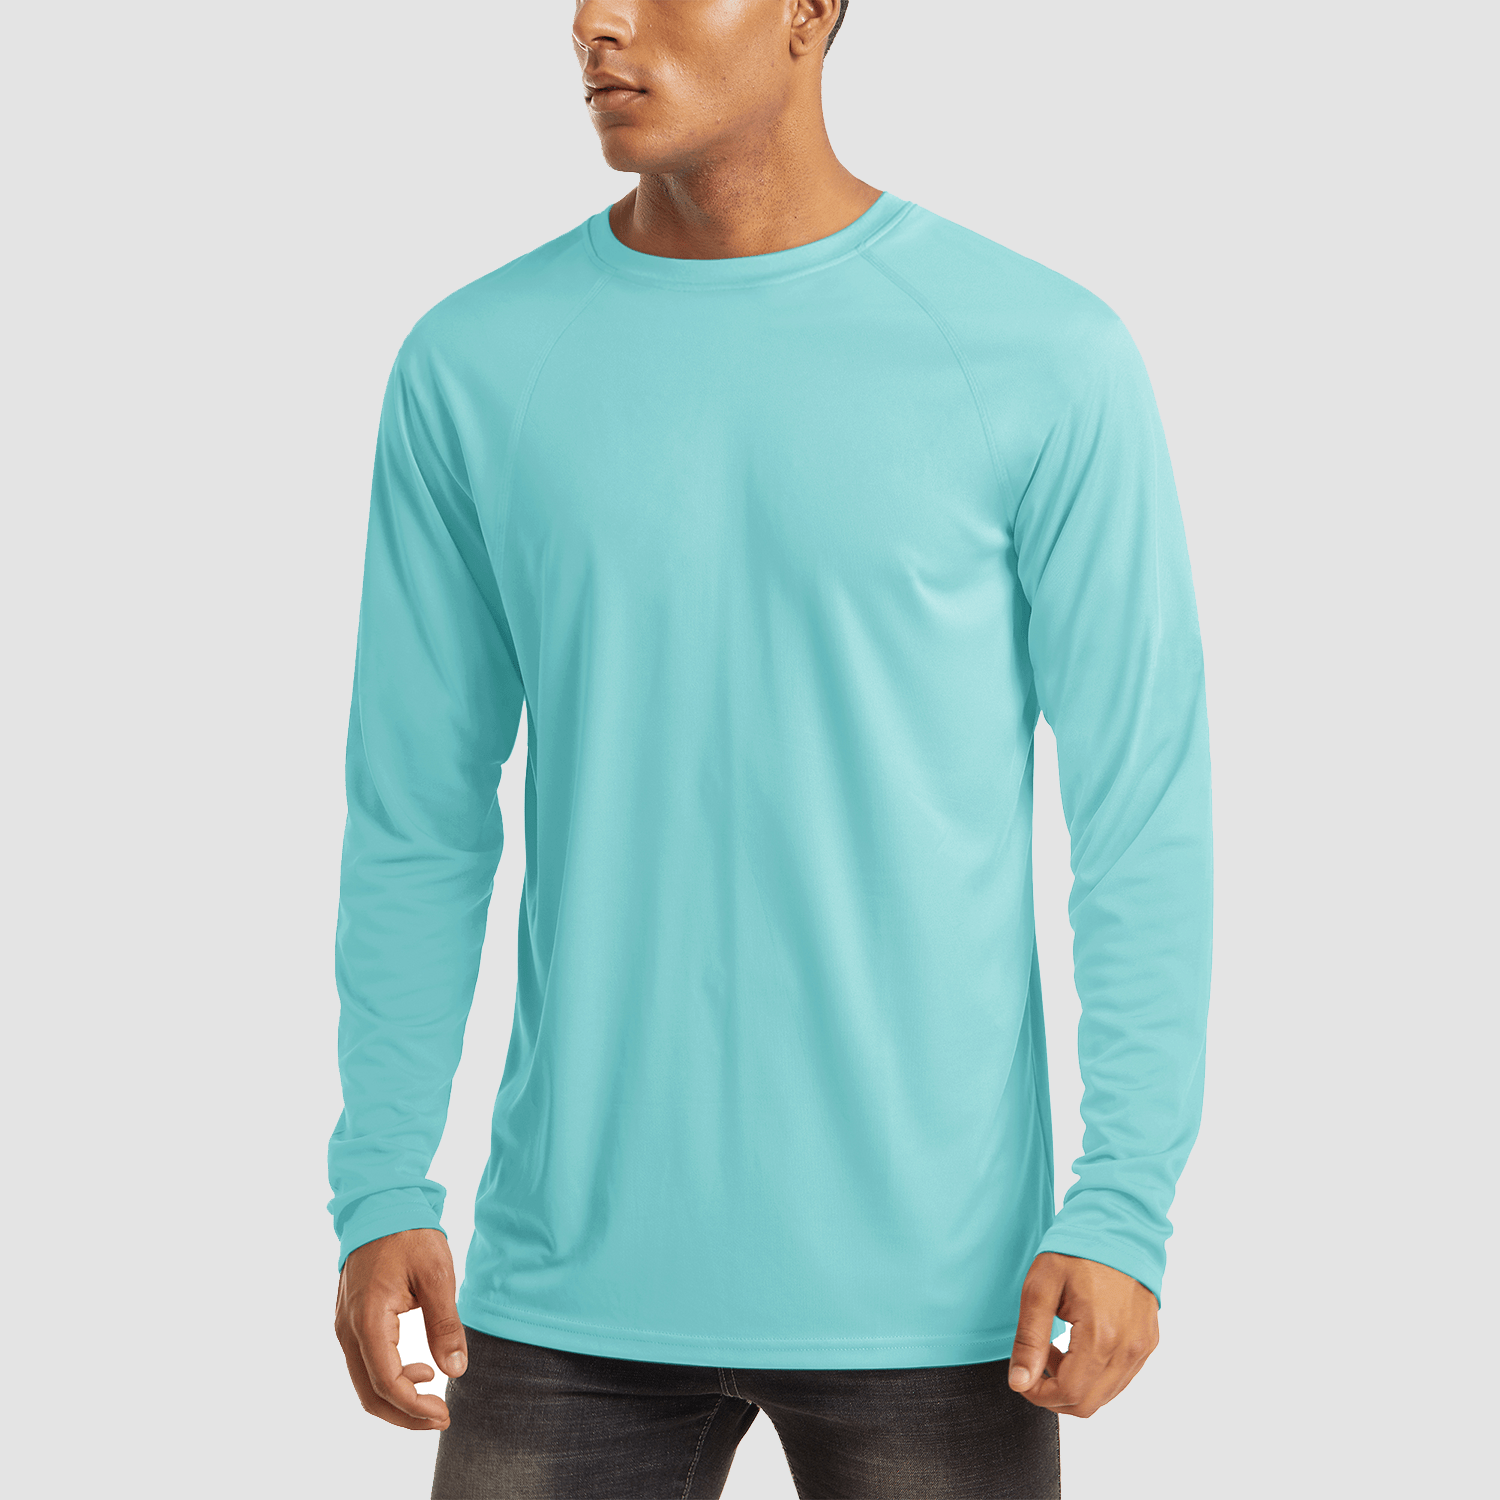 【Buy 4 Get 4th Free】Men's Long Sleeve Hooded Shirt UPF 50+ Athletic Shirt, Grey Green / S